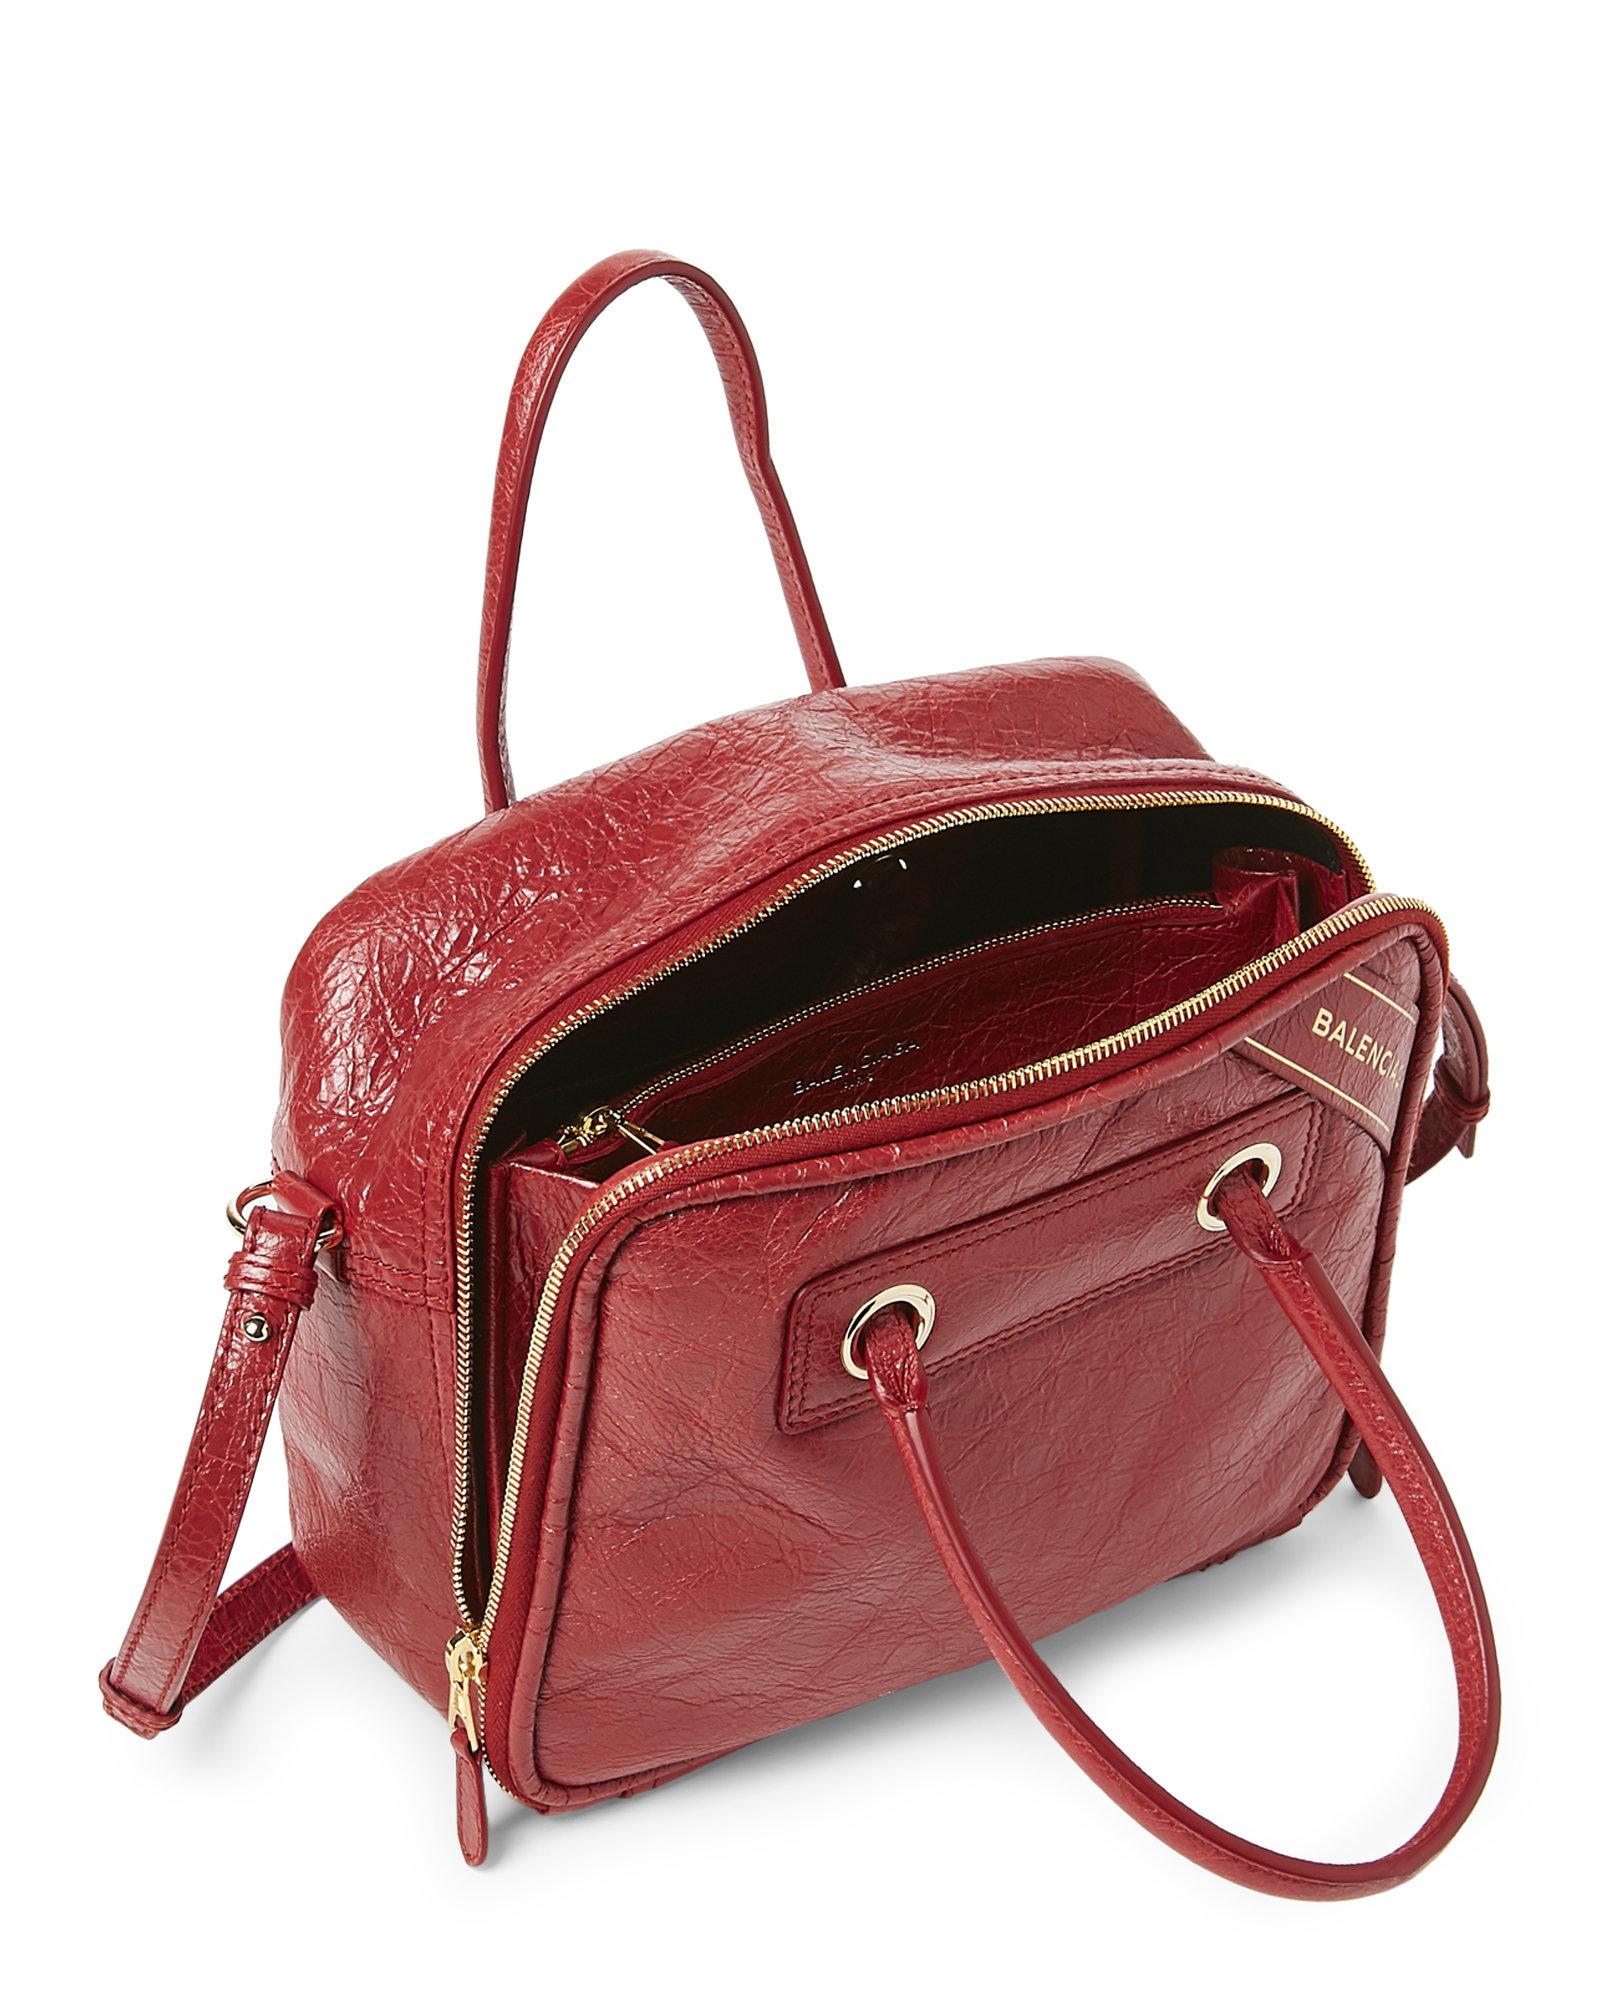 Balenciaga Blanket Bag Small Flash Sales, 55% OFF | empow-her.com